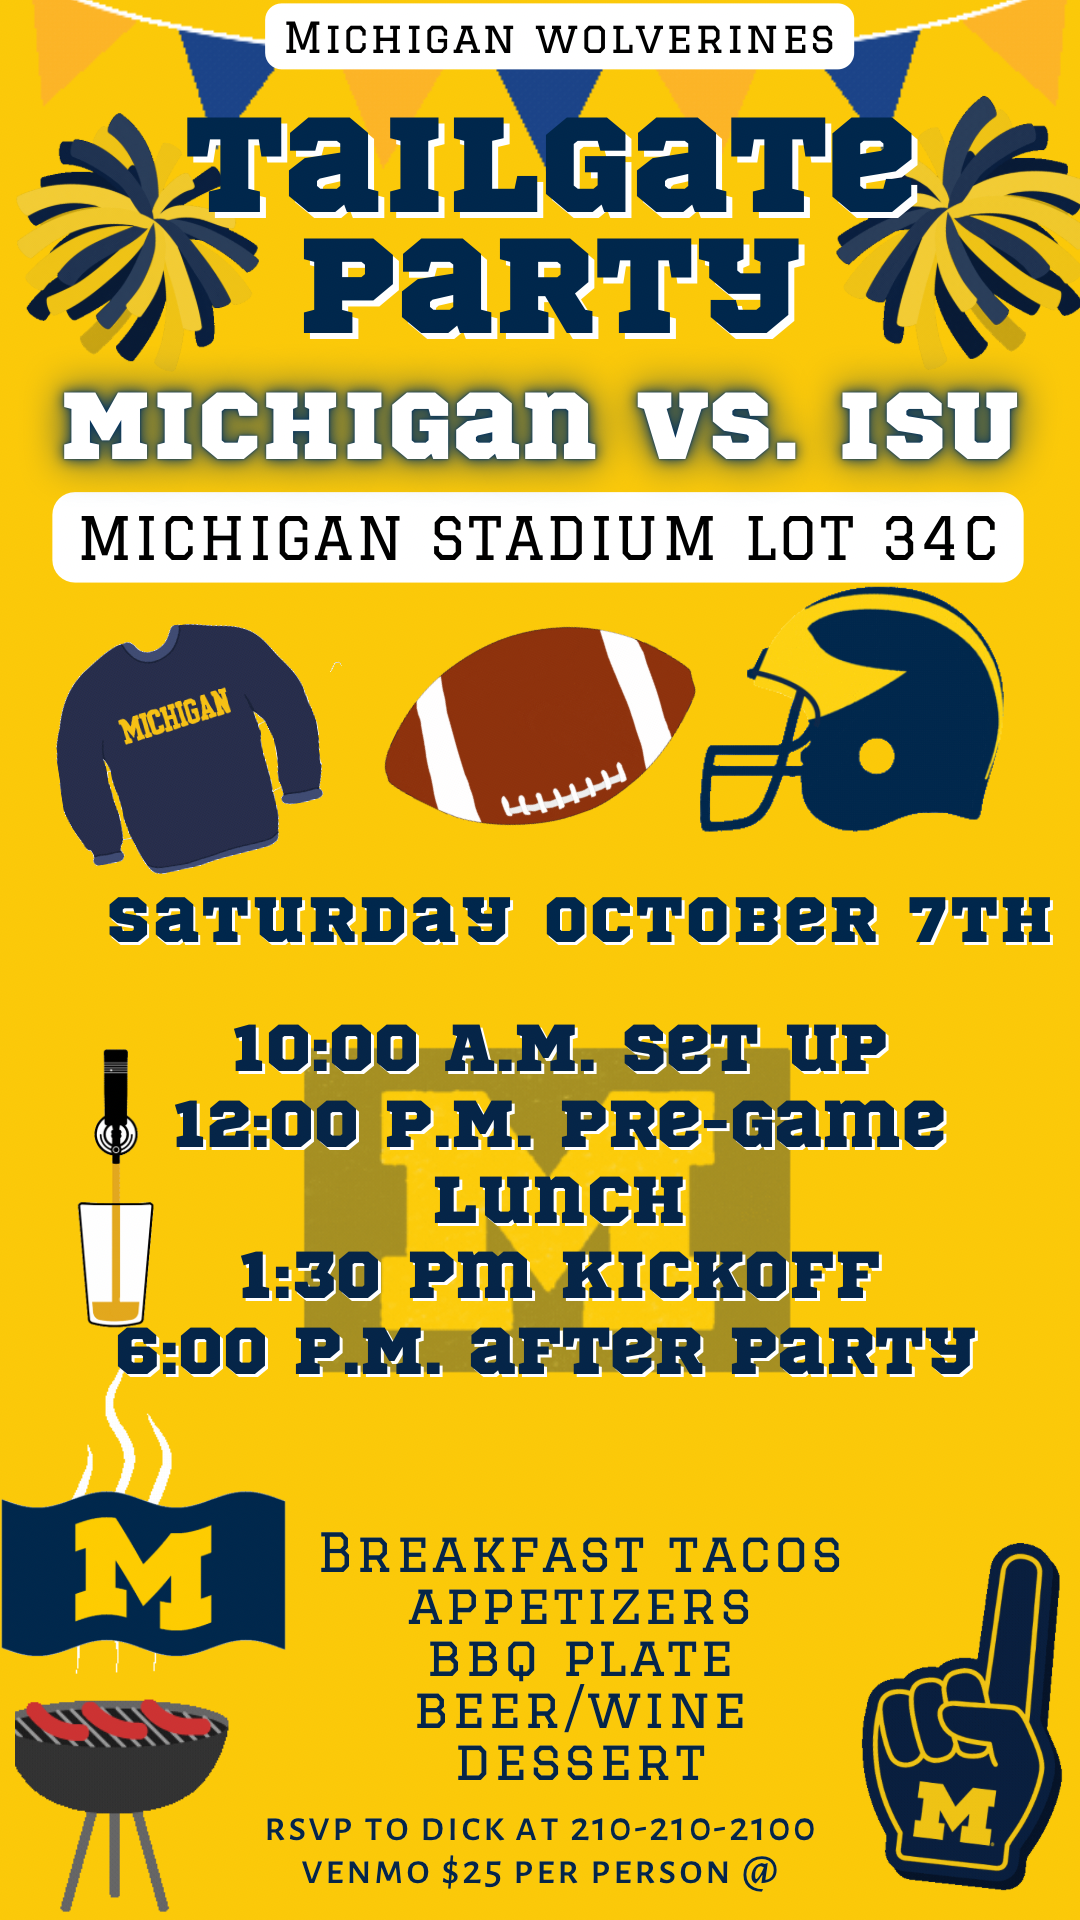 The Michigan Wolverines football team represents the University of Michigan 